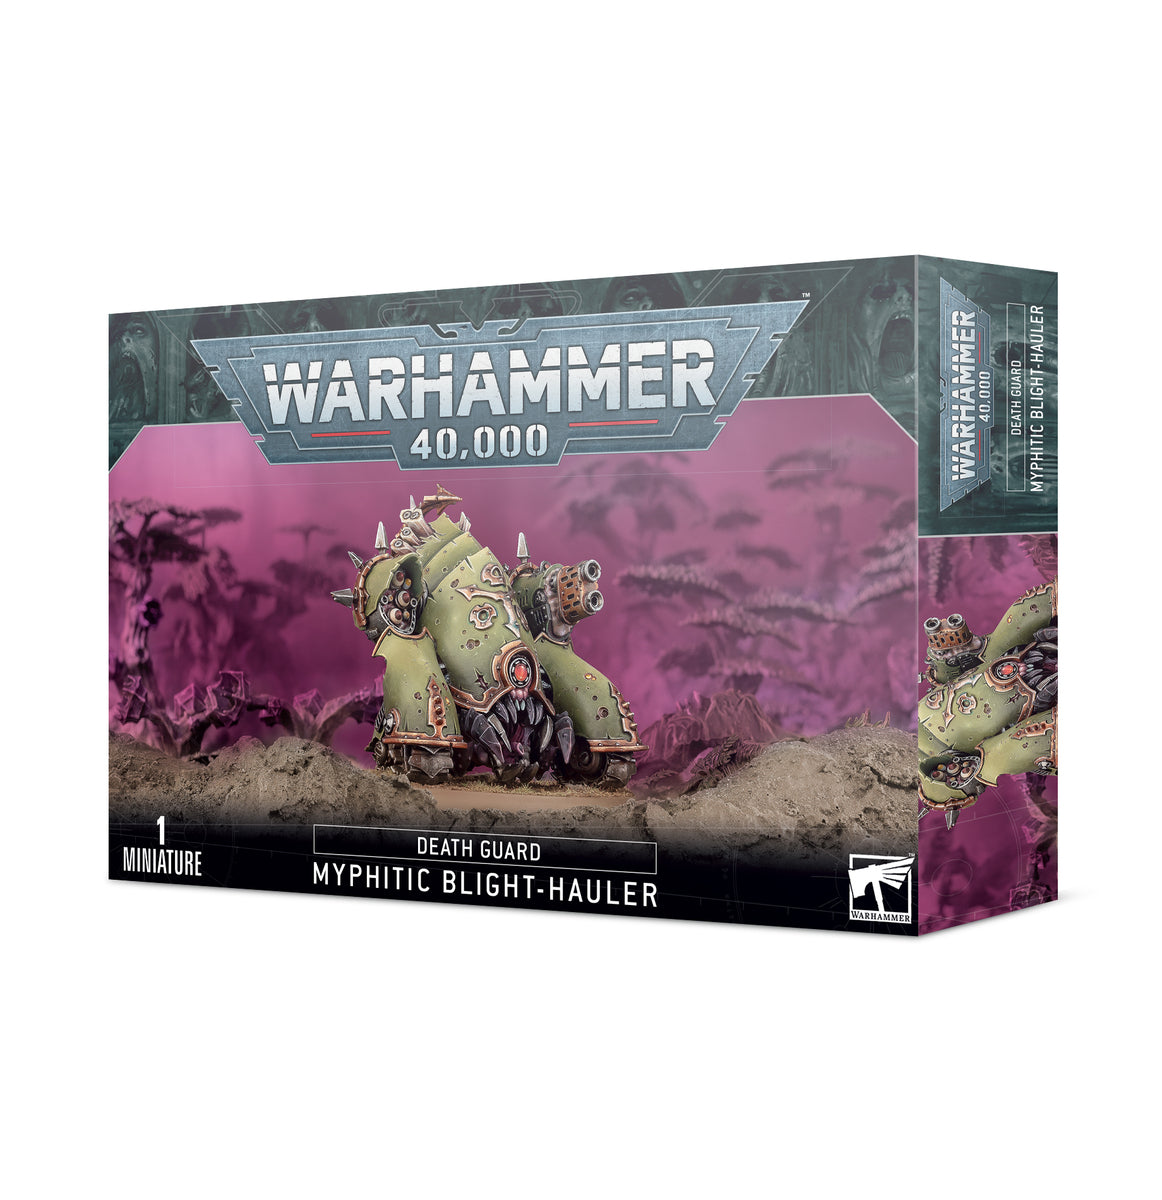 Warhammer 40000 - Death Guard Mythic Blight-hauler - [Sunshine-Coast] - Games Workshop - [RC-Car] - [Scale-Model]